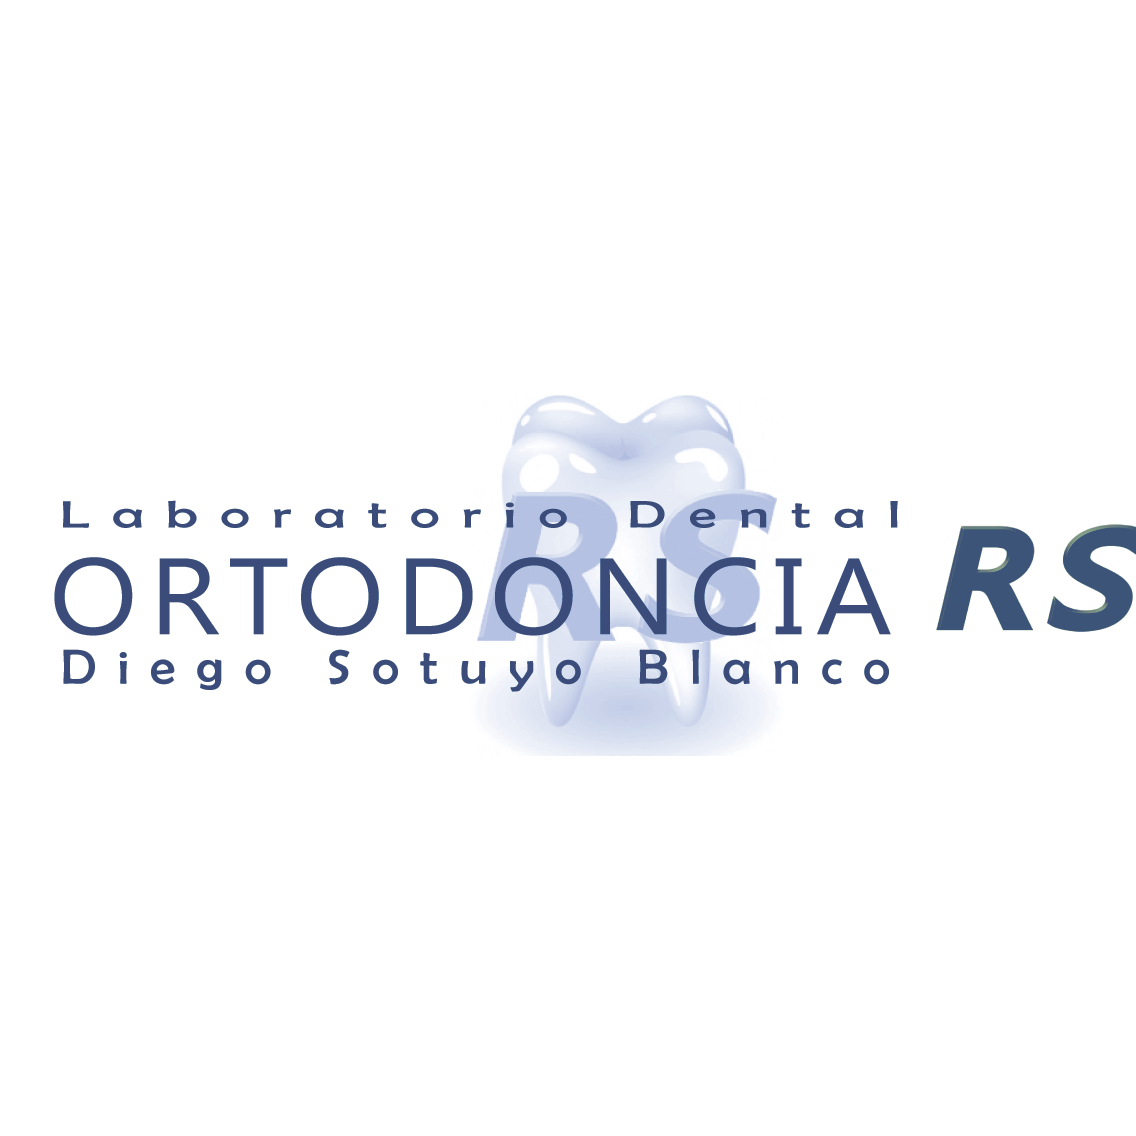 Ortodoncia RS, Diego Sotuyo Blanco Barcelona